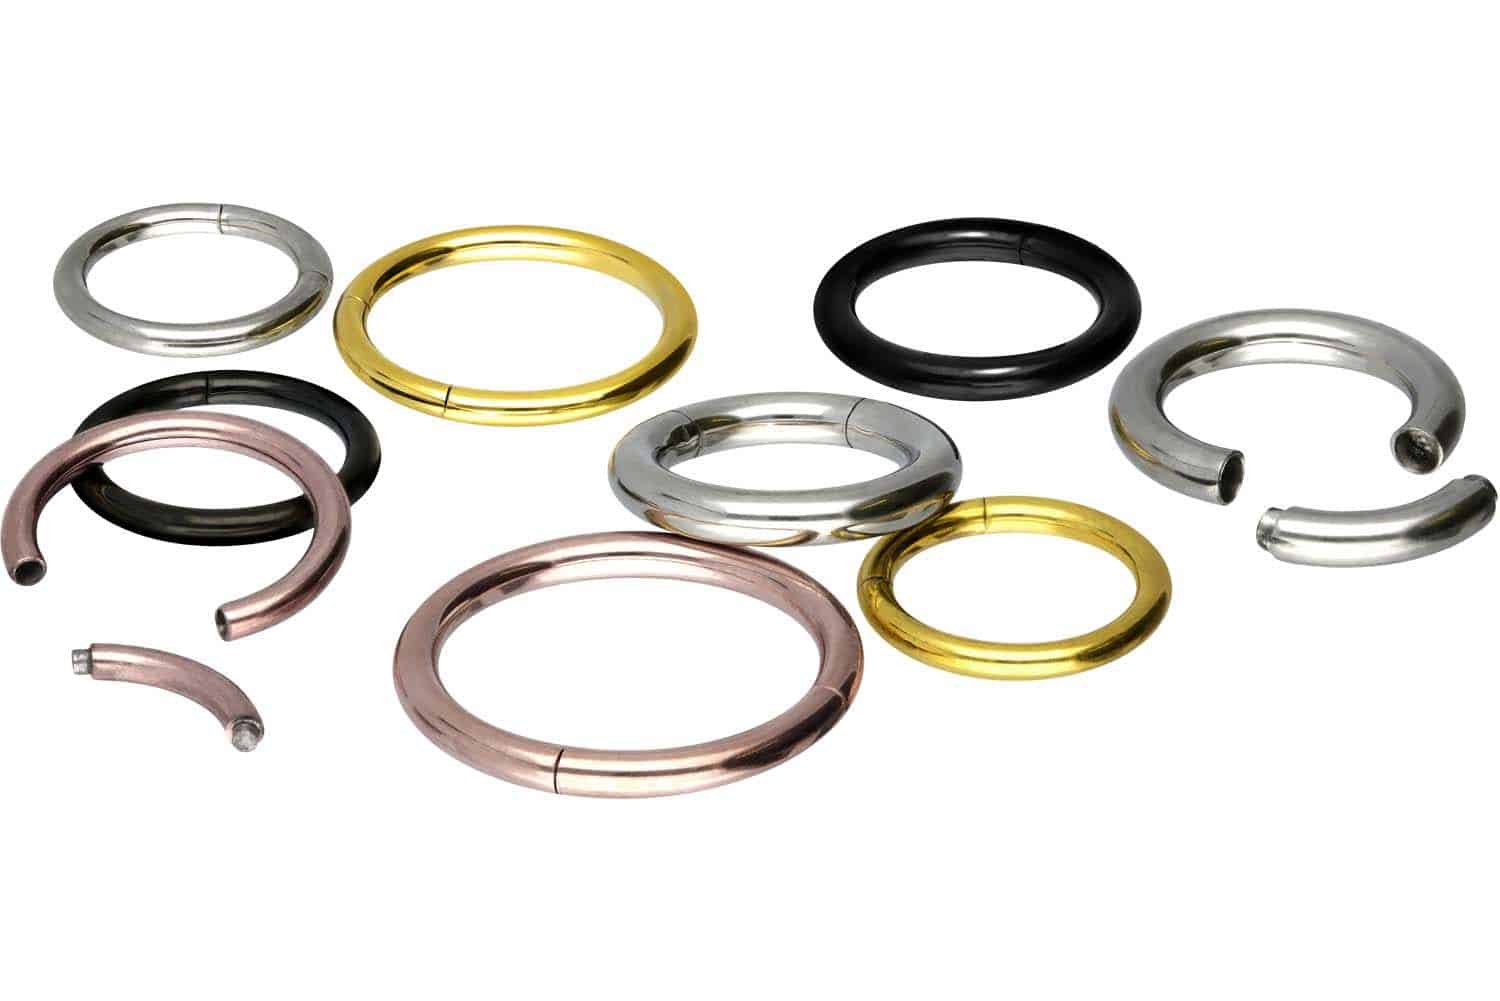 Surgical steel segment ring